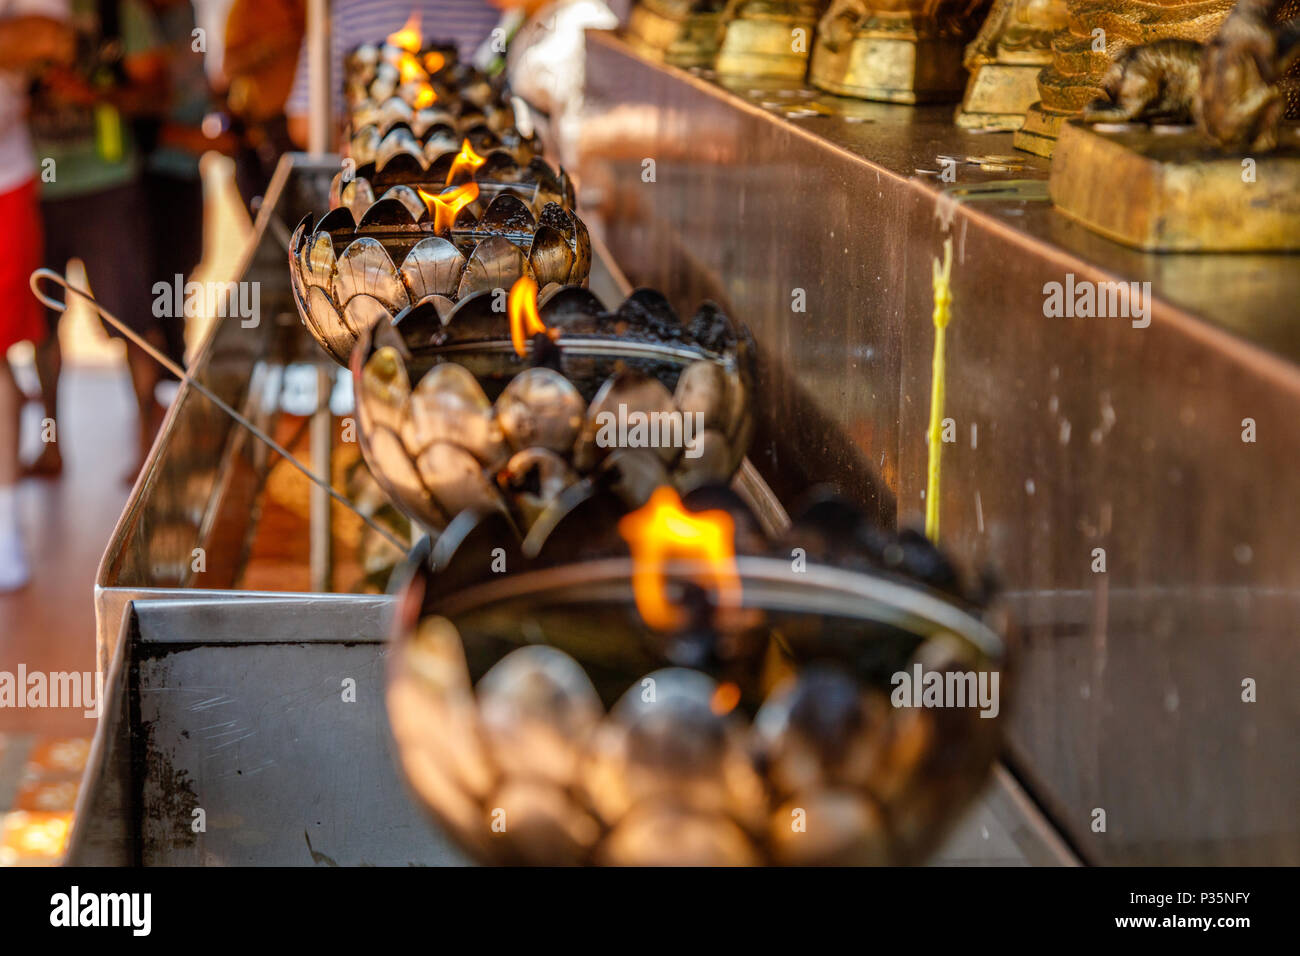 Oil burners at Wat Prathat Doi Suthep, Chiang Mai province, Thailand Stock Photo